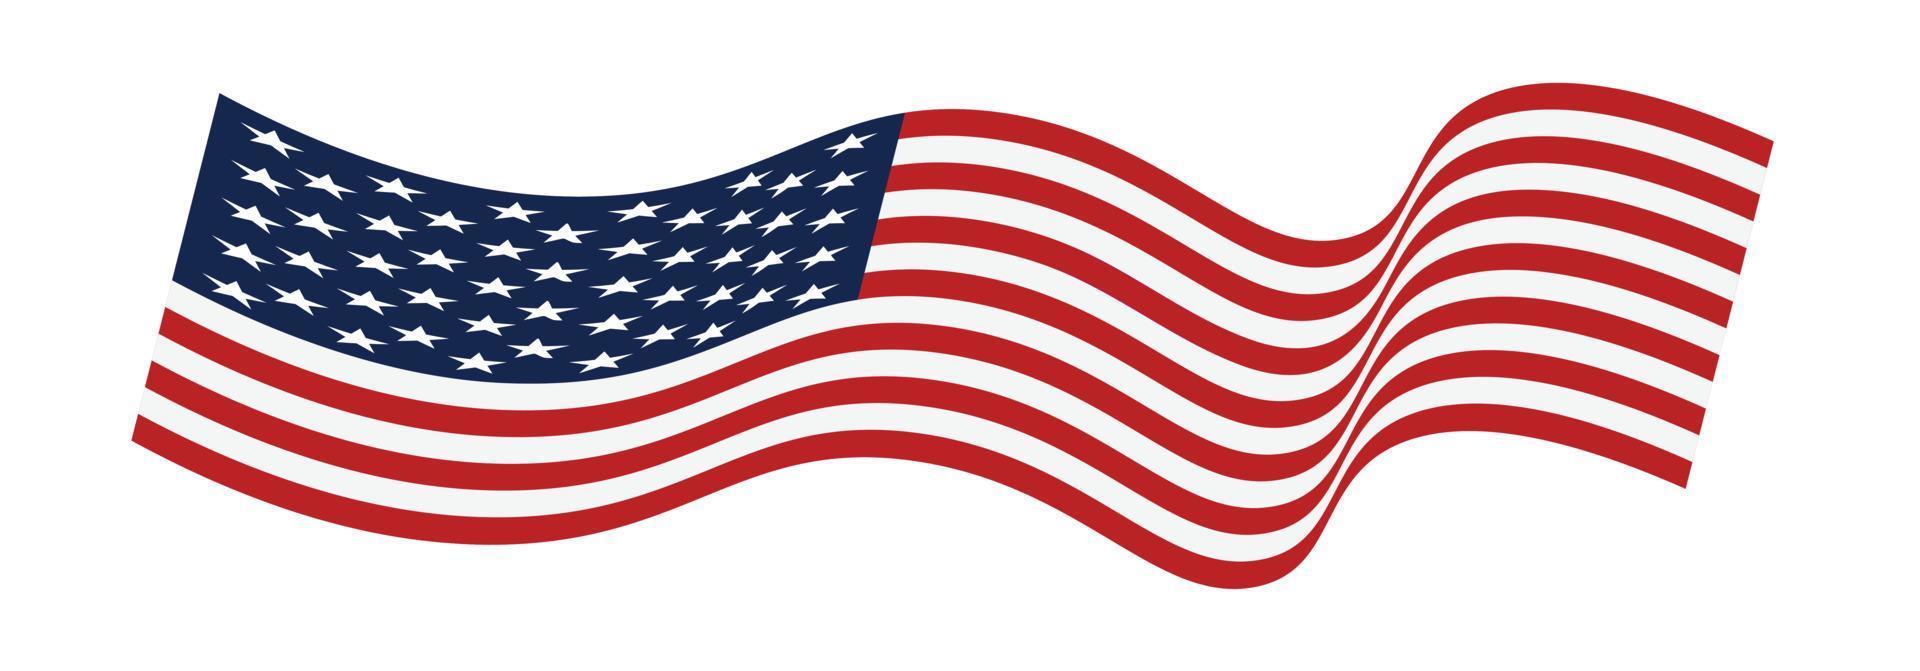 USA flag vector illustration. eps 10 vector